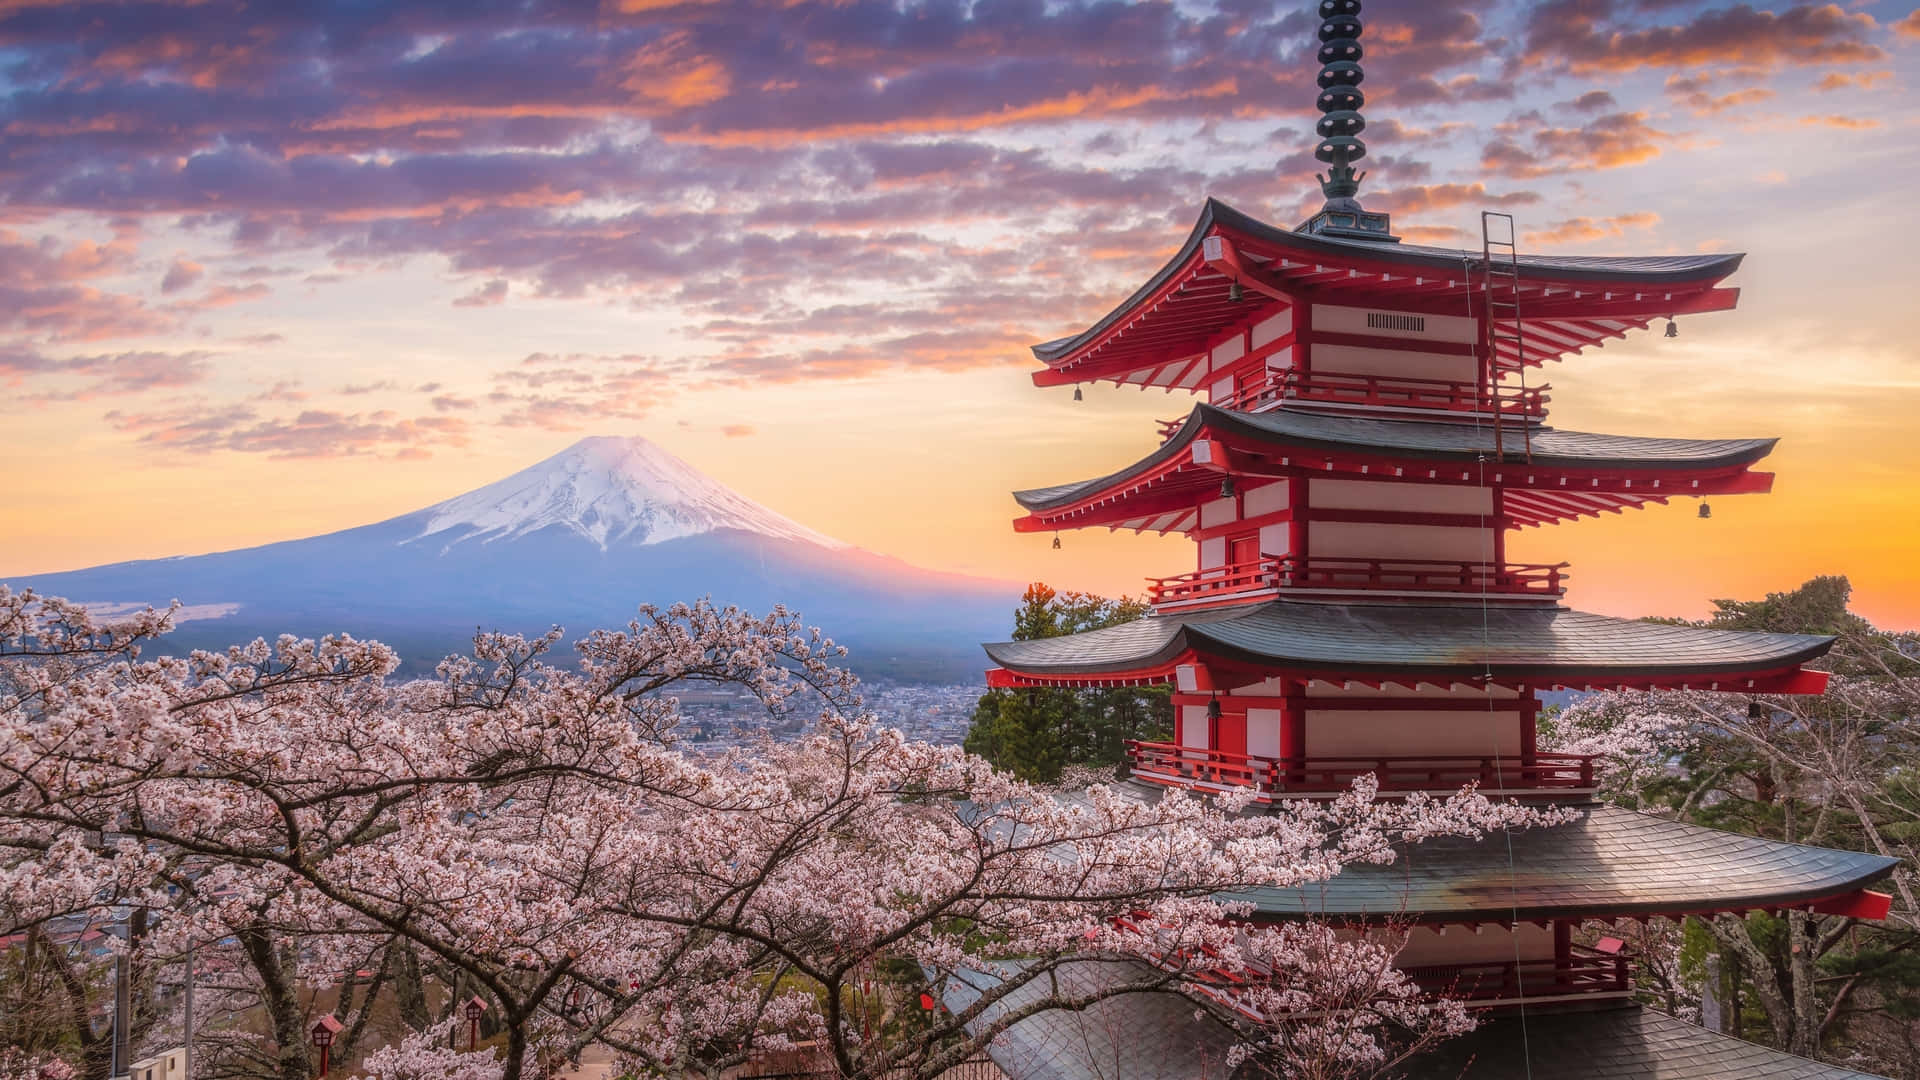 Fuji Peak With Chureito Pagoda And Cherry Blossoms Wallpaper